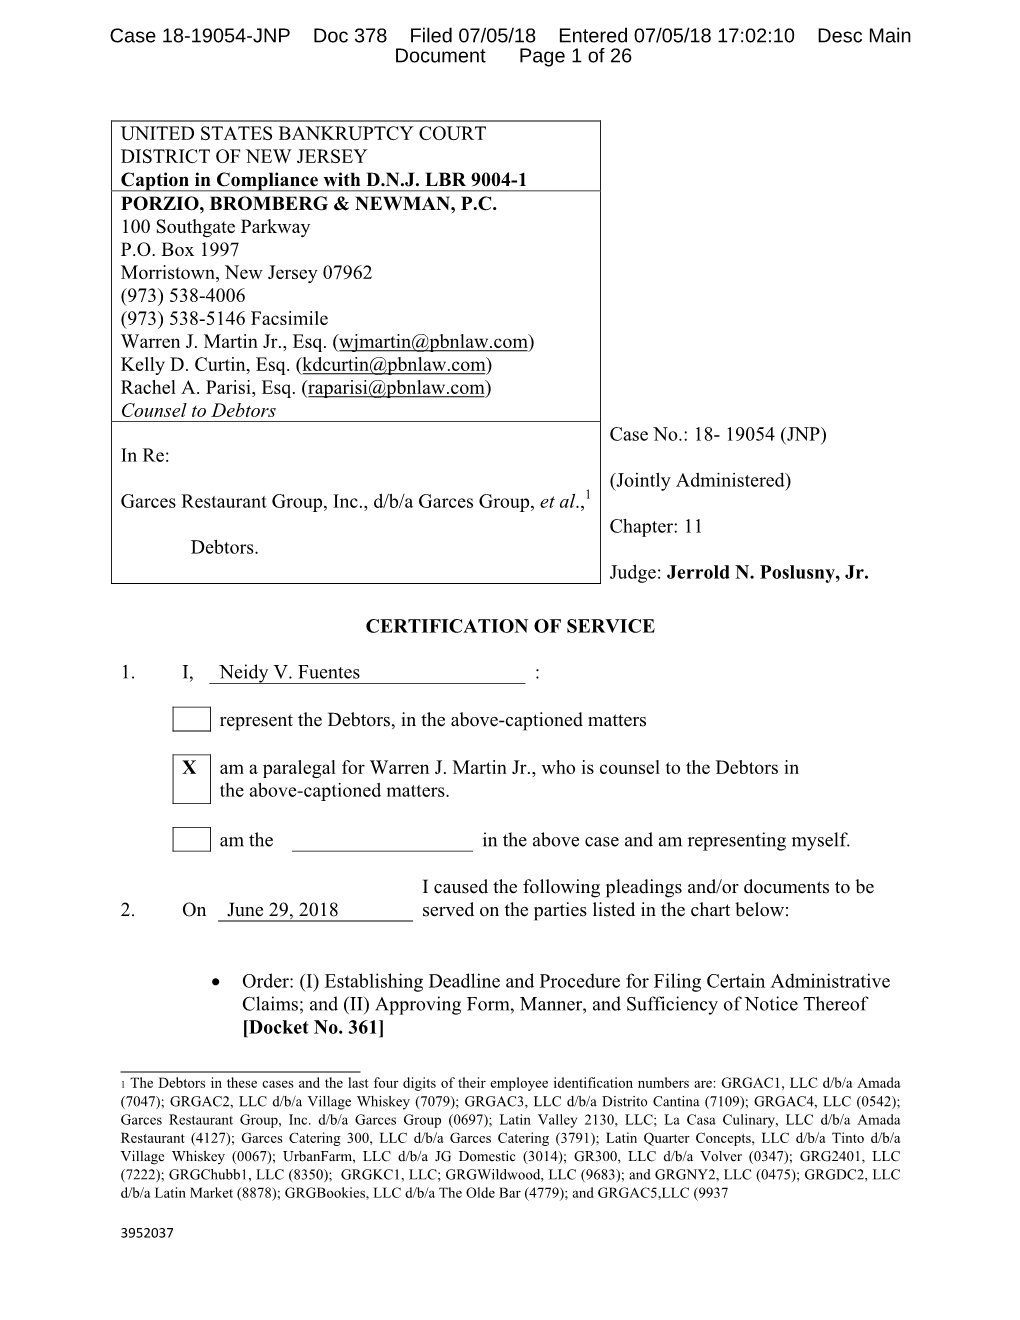 Case 18-19054-JNP Doc 378 Filed 07/05/18 Entered 07/05/18 17:02:10 Desc Main Document Page 1 of 26